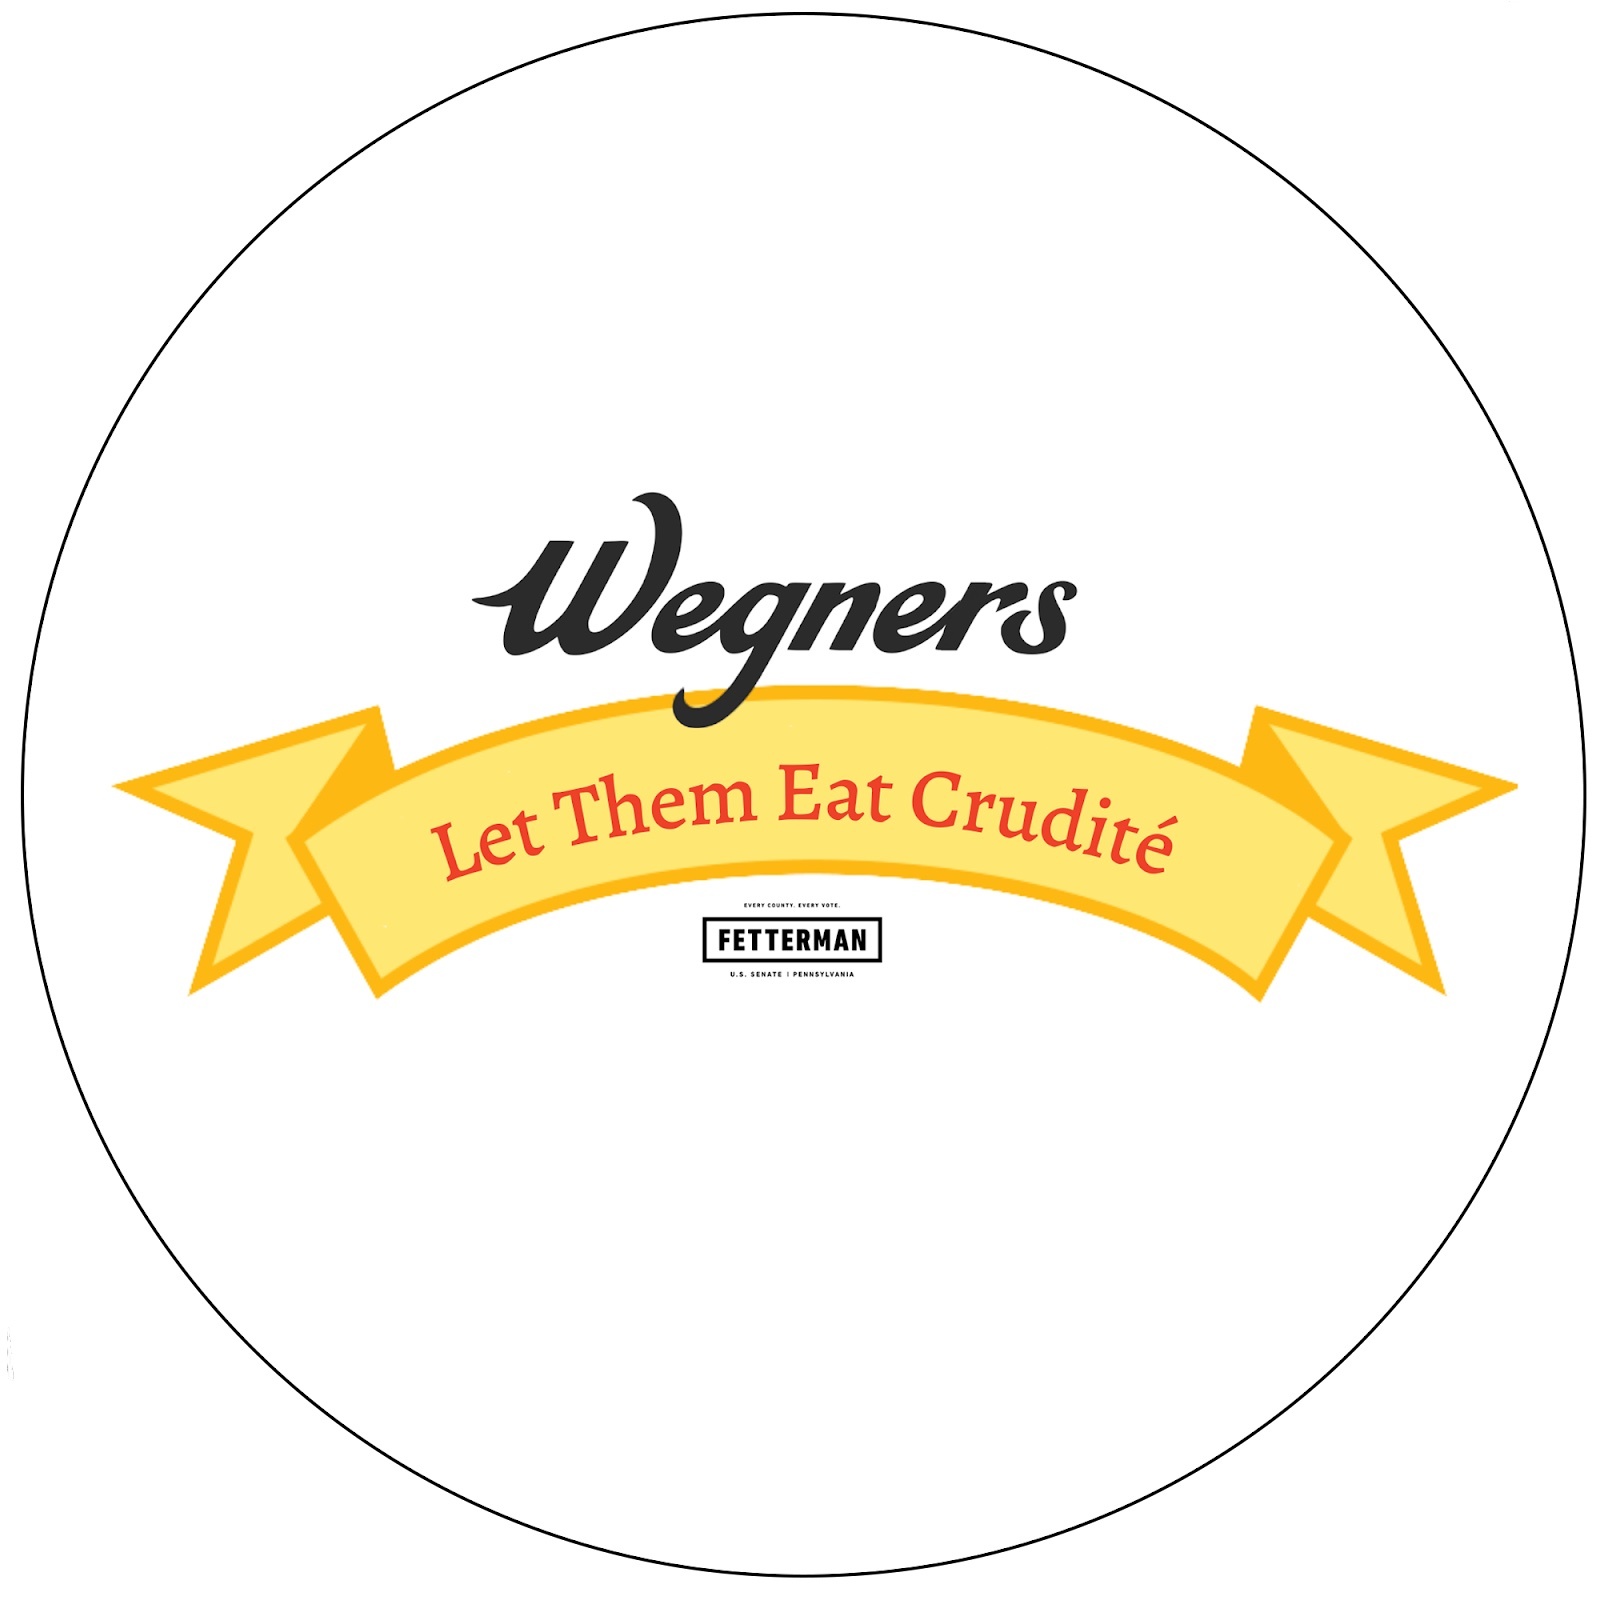 The sticker reads: Wegners: Let them eat crudite.